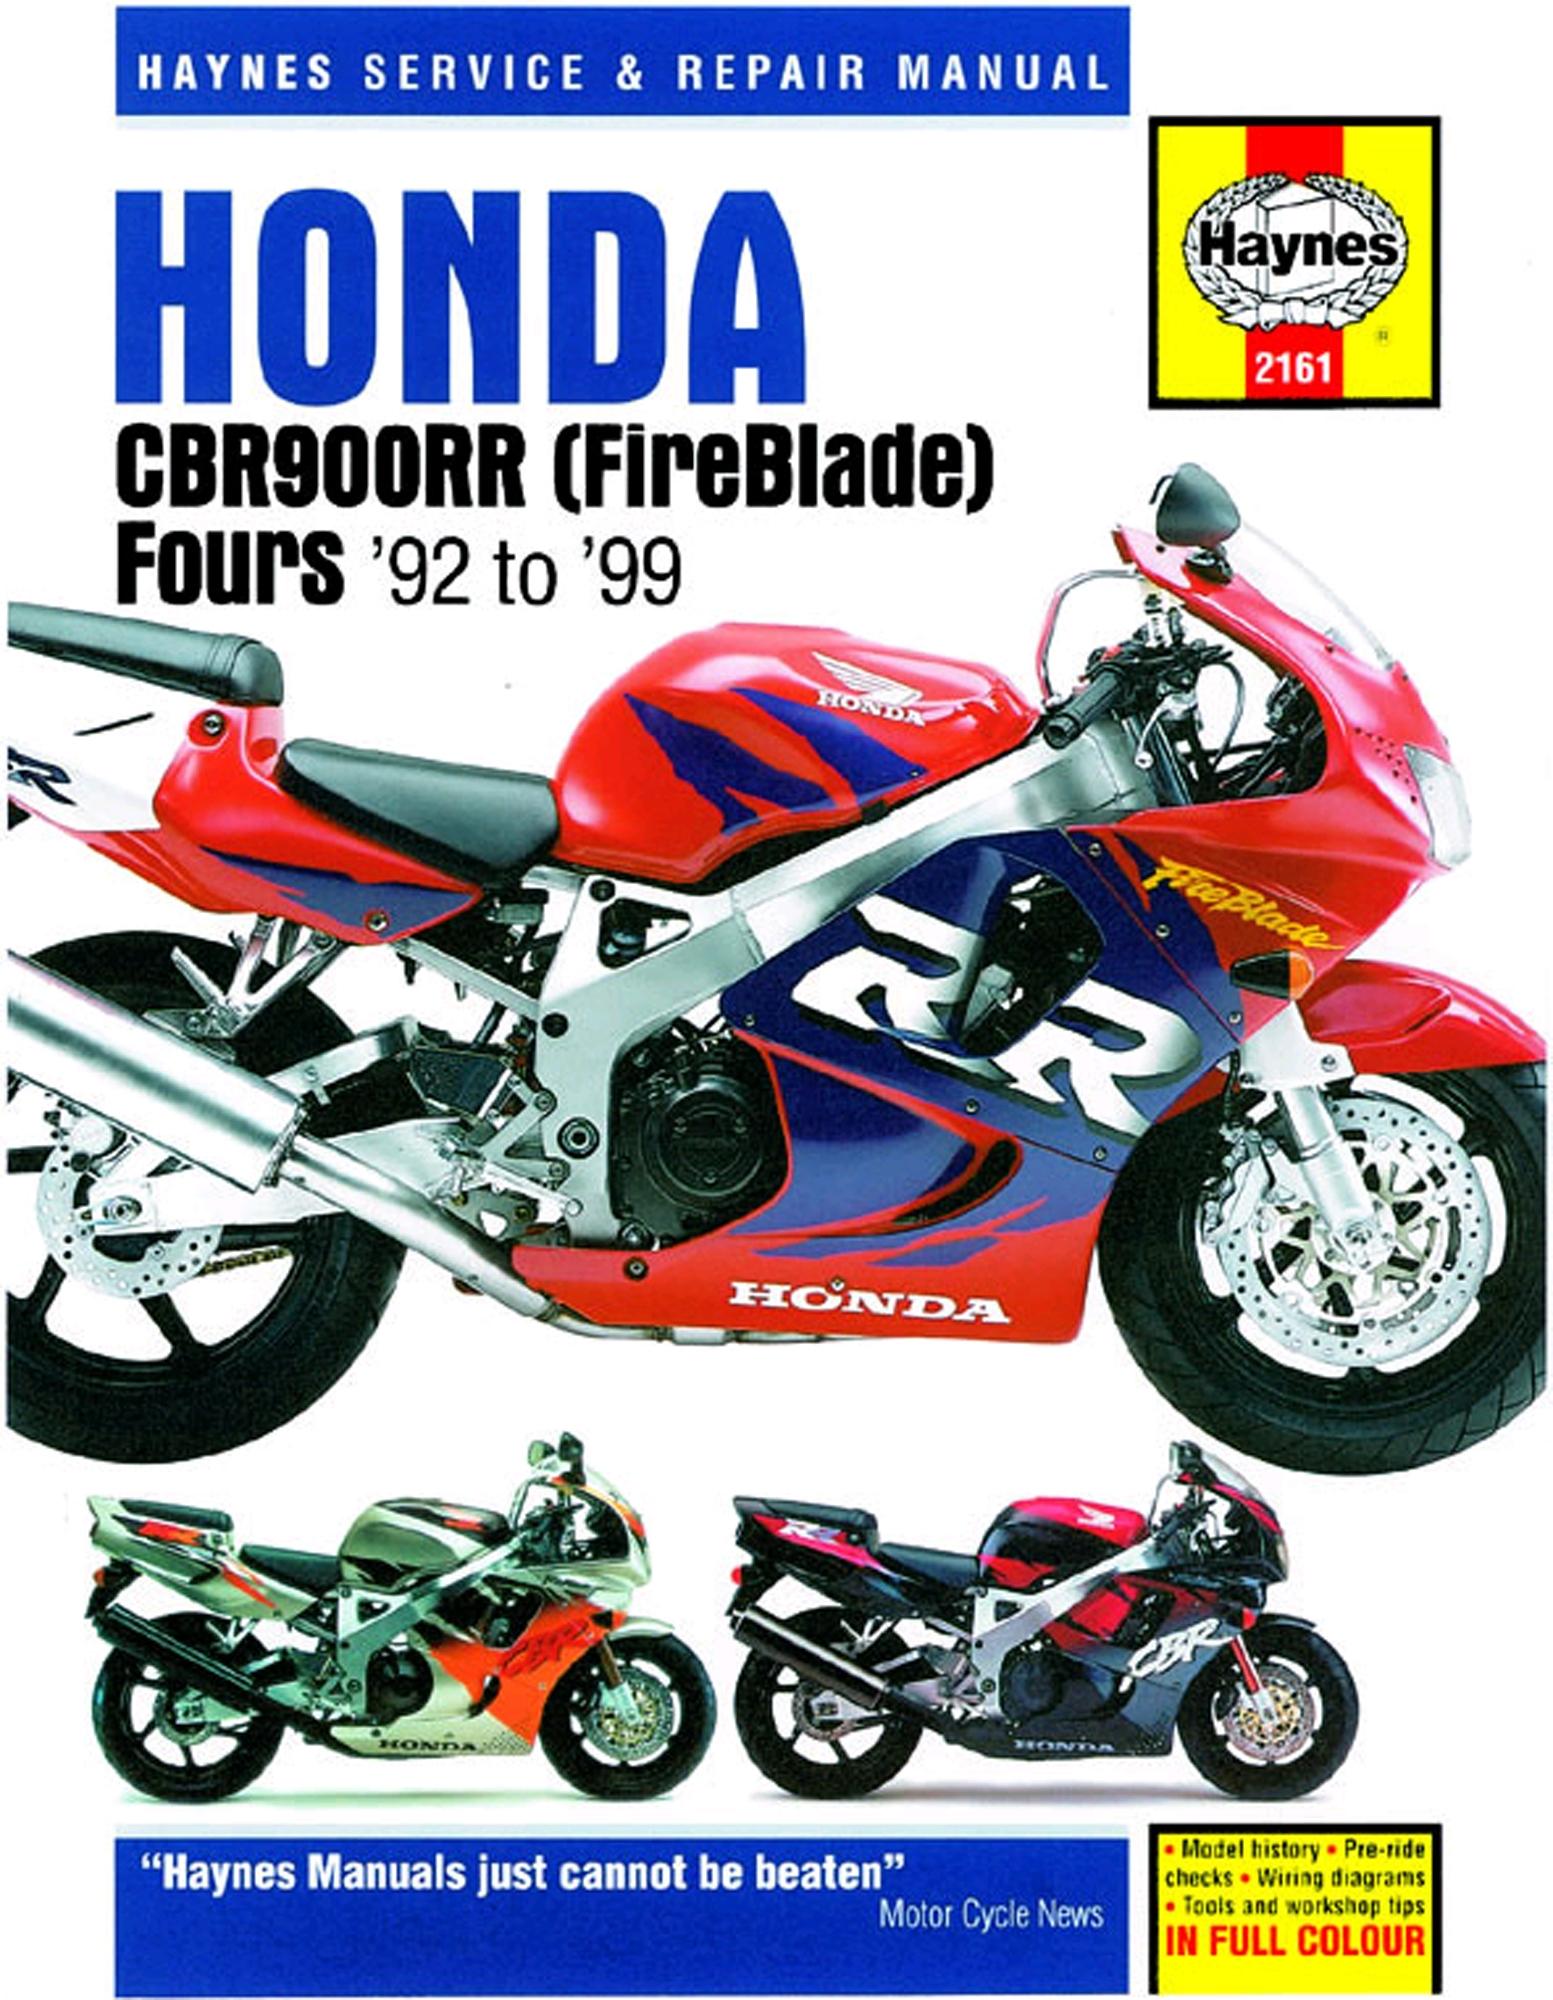 Honda motorcycles ashford #1